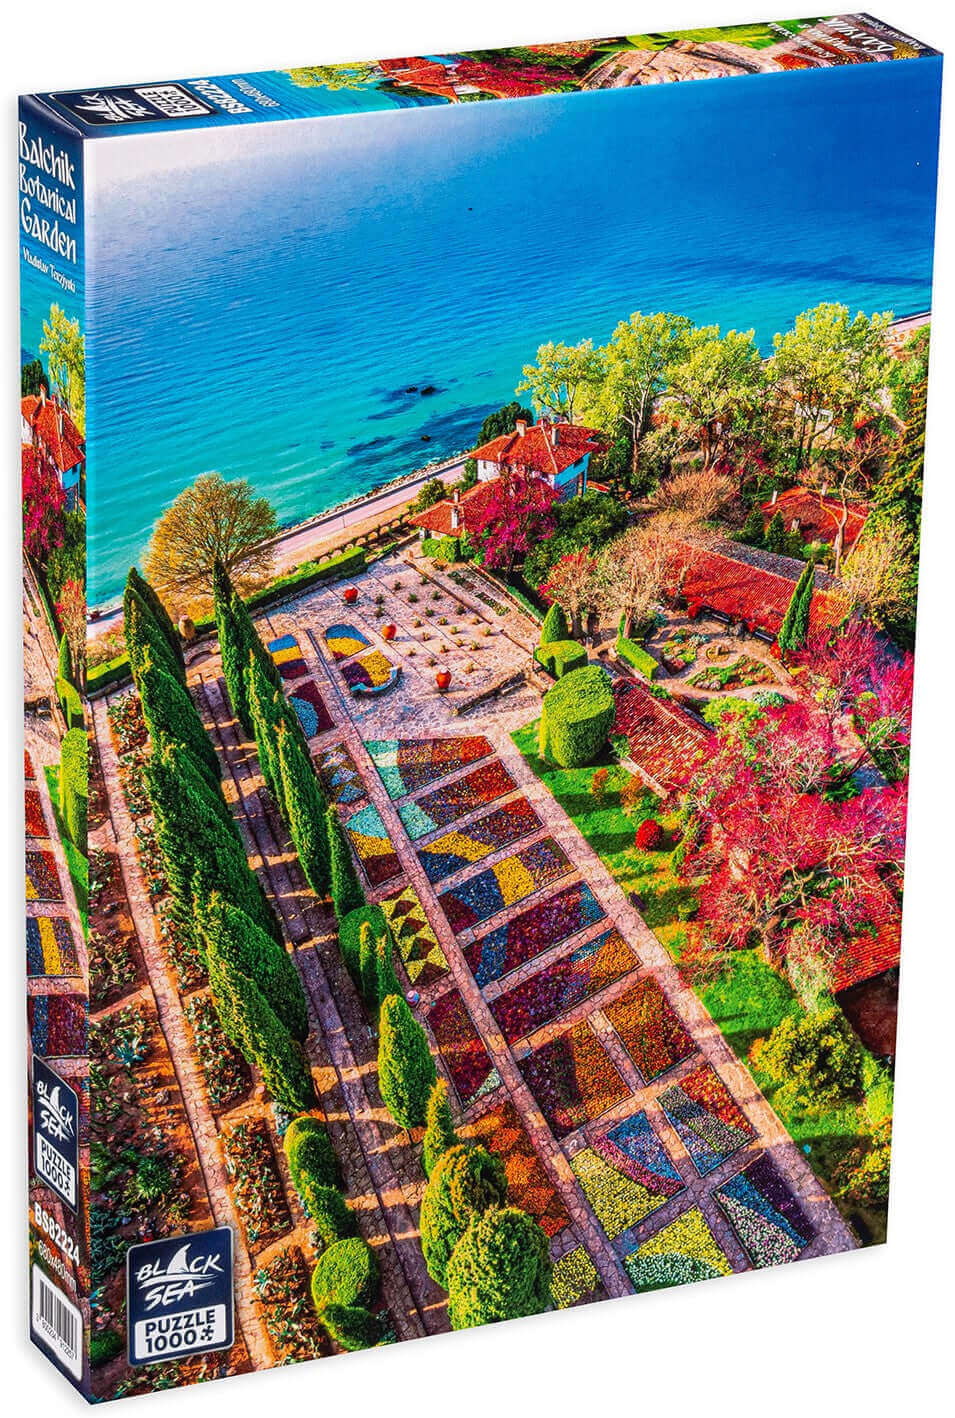 Puzzle Black Sea 1000 pieces - Balchik Botanical Garden